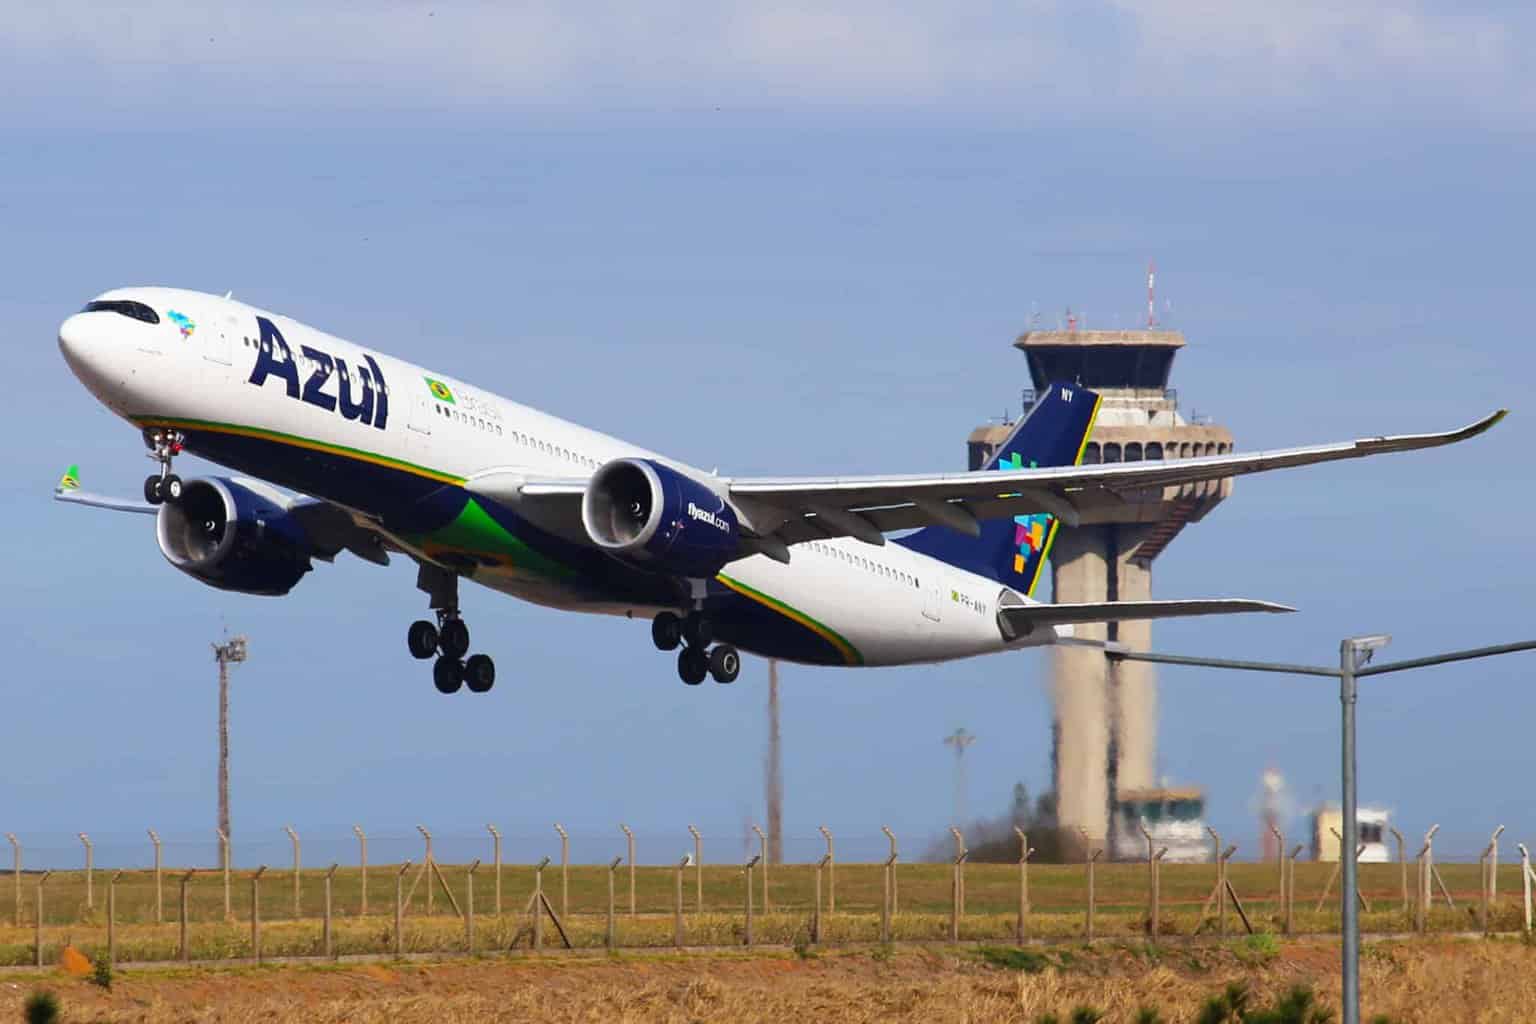 Avio Azul Campinas airport Finance financial restructuring 2023 year awards recognition sustainability scholarship flights Paris